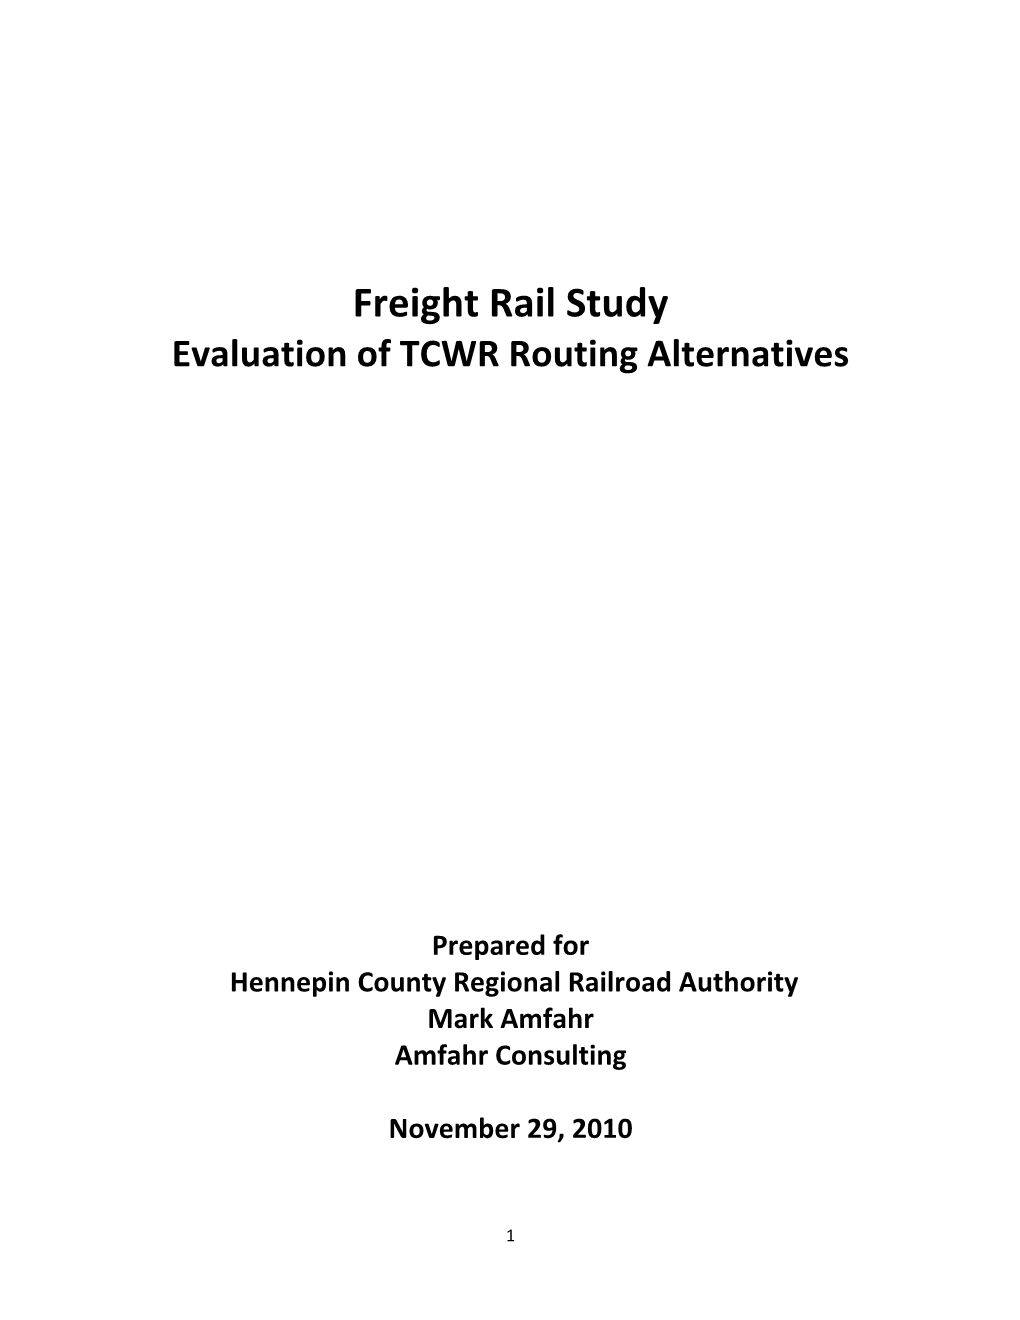 Freight Rail Study Report